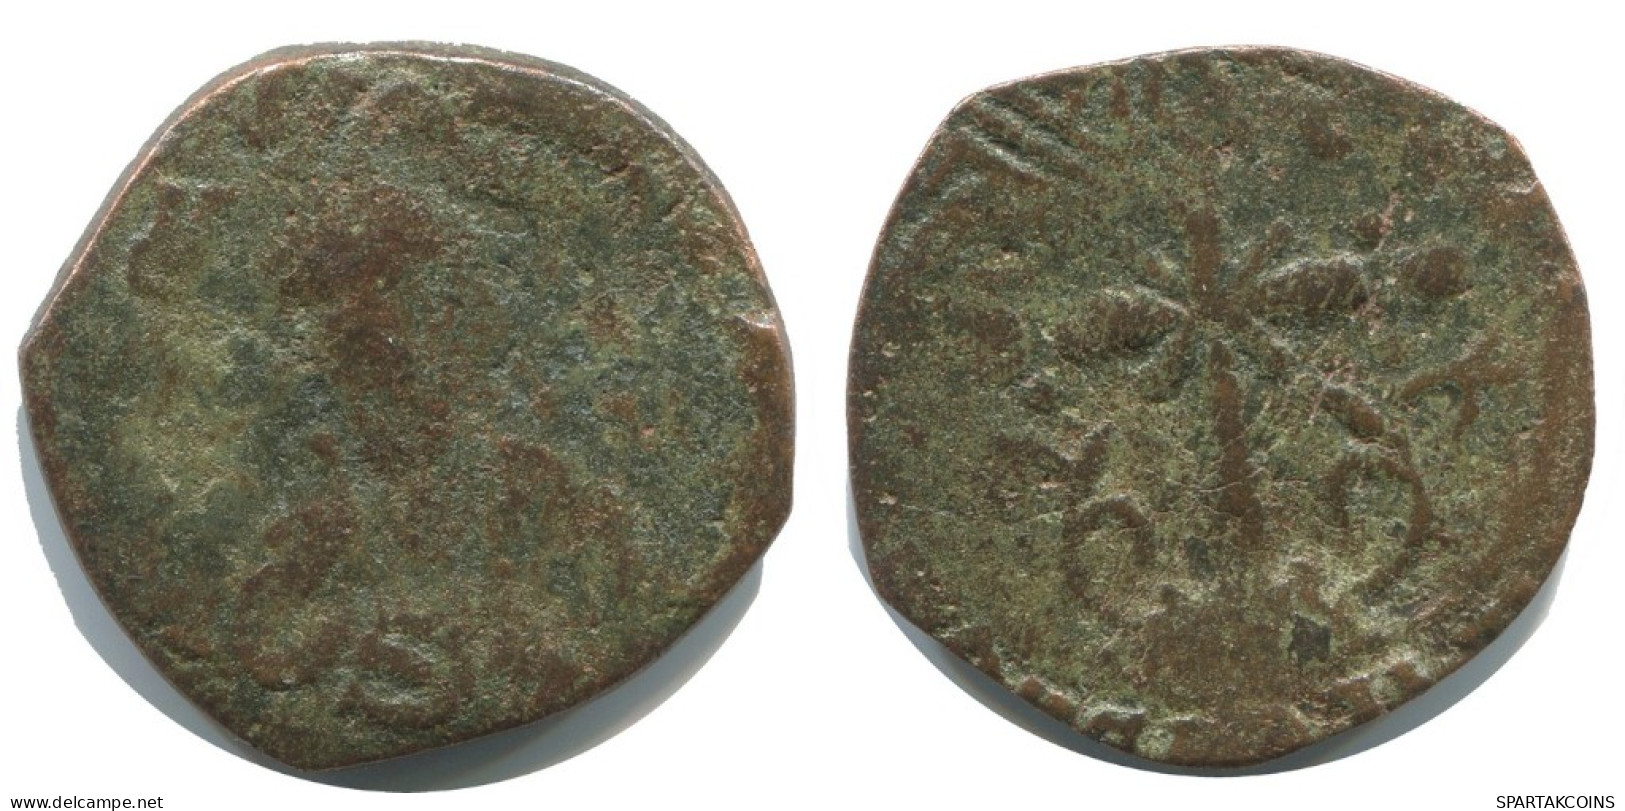 JESUS CHRIST ANONYMOUS CROSS FOLLIS Ancient BYZANTINE Coin 3.6g/24mm #AB340.9.U.A - Byzantine